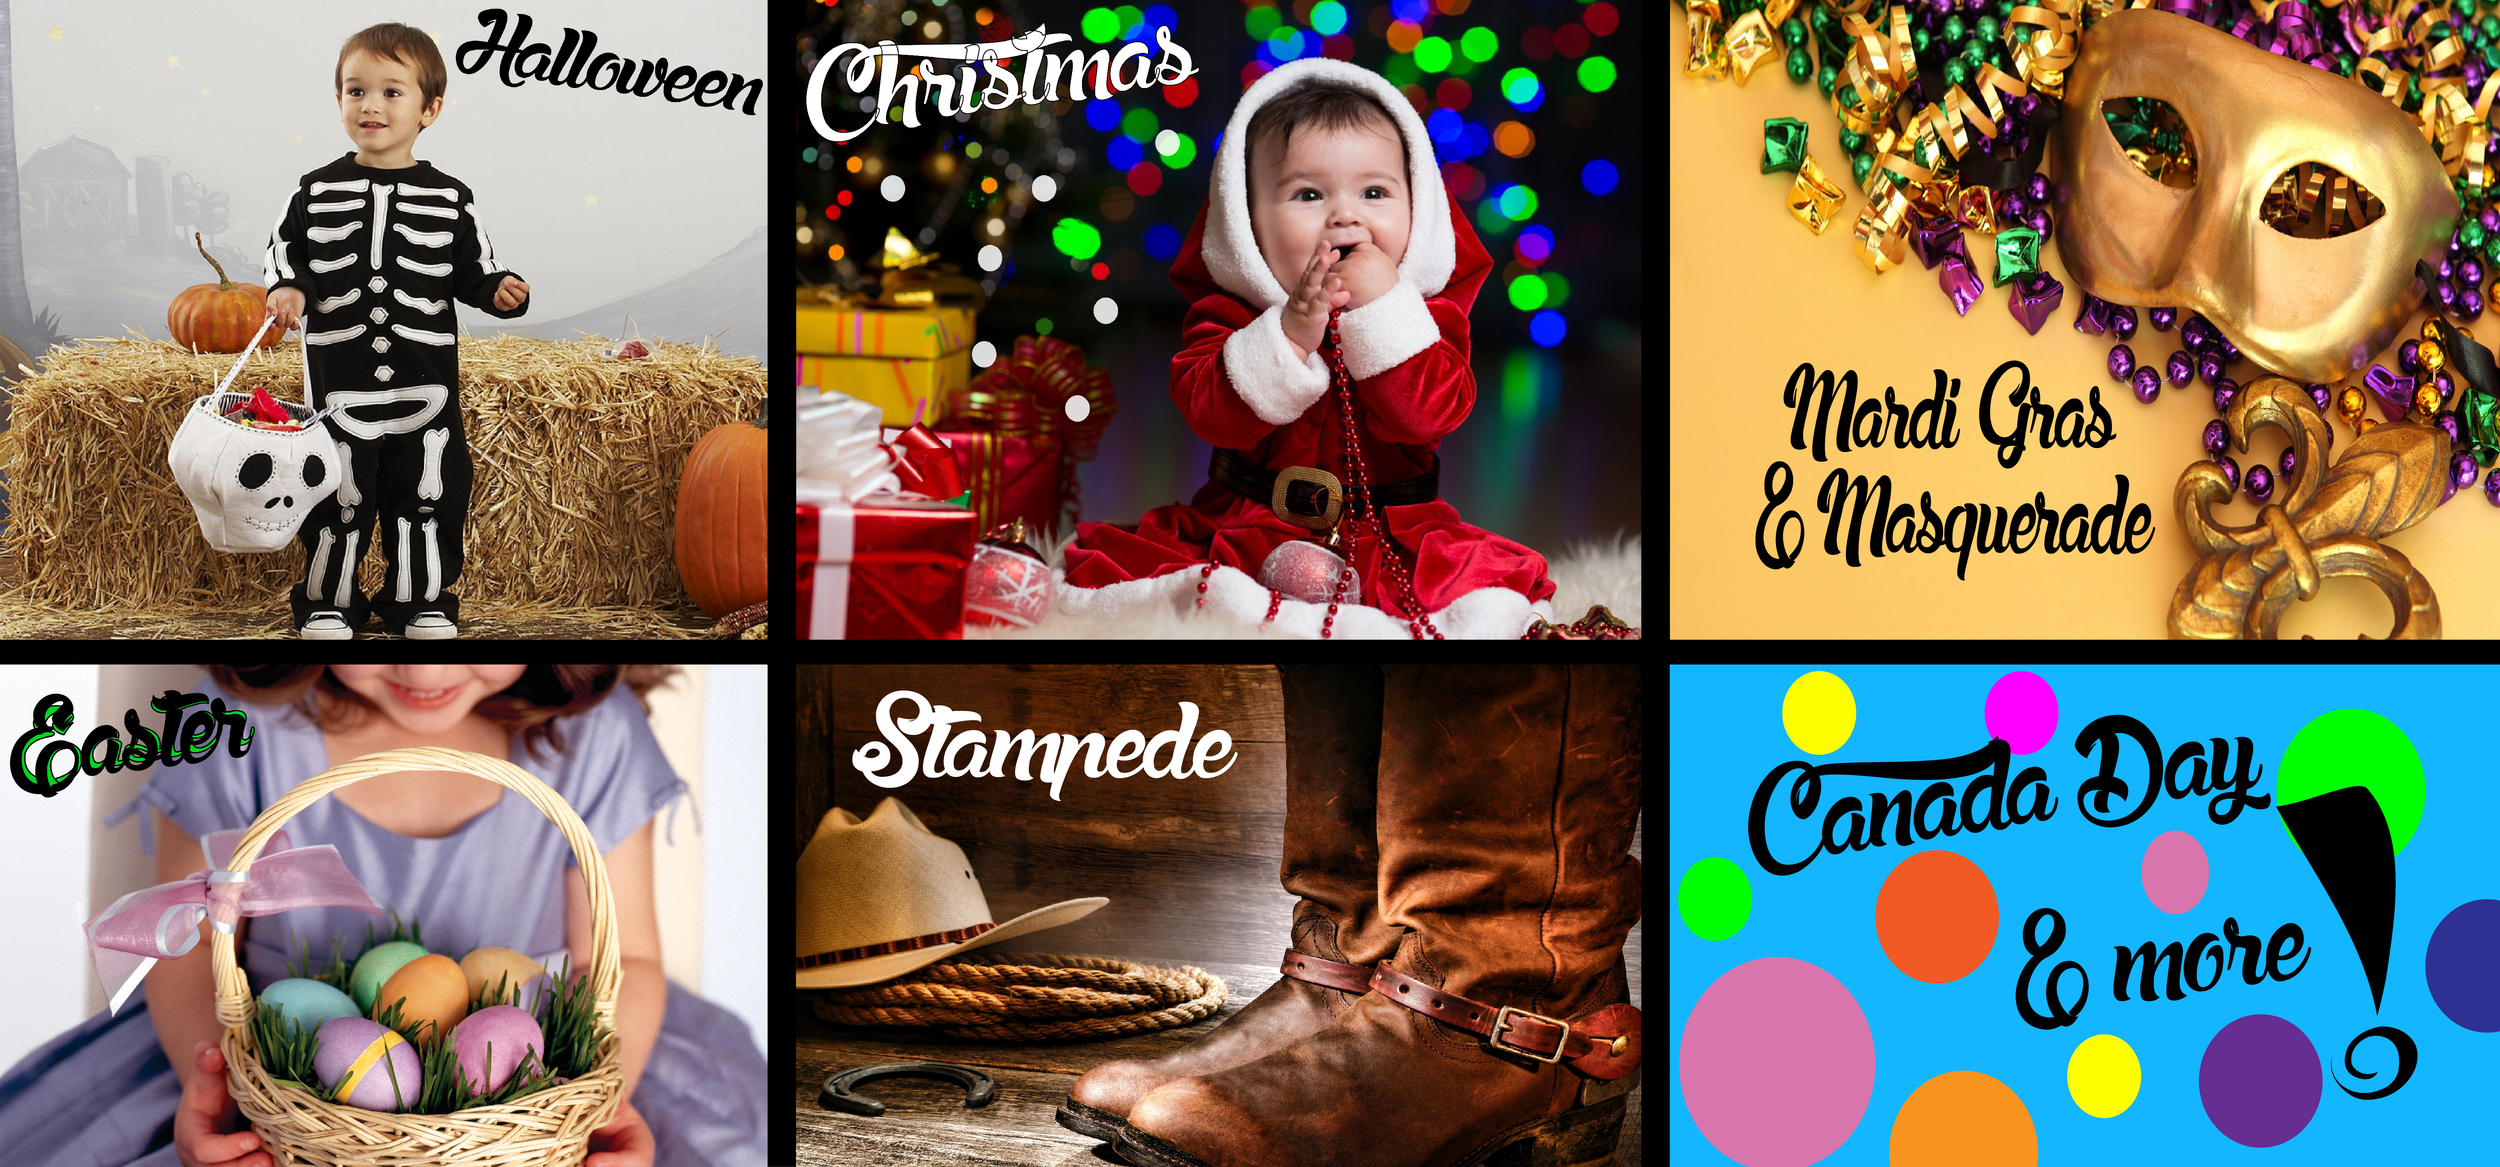 Holidays-Themes Collage-01.jpg